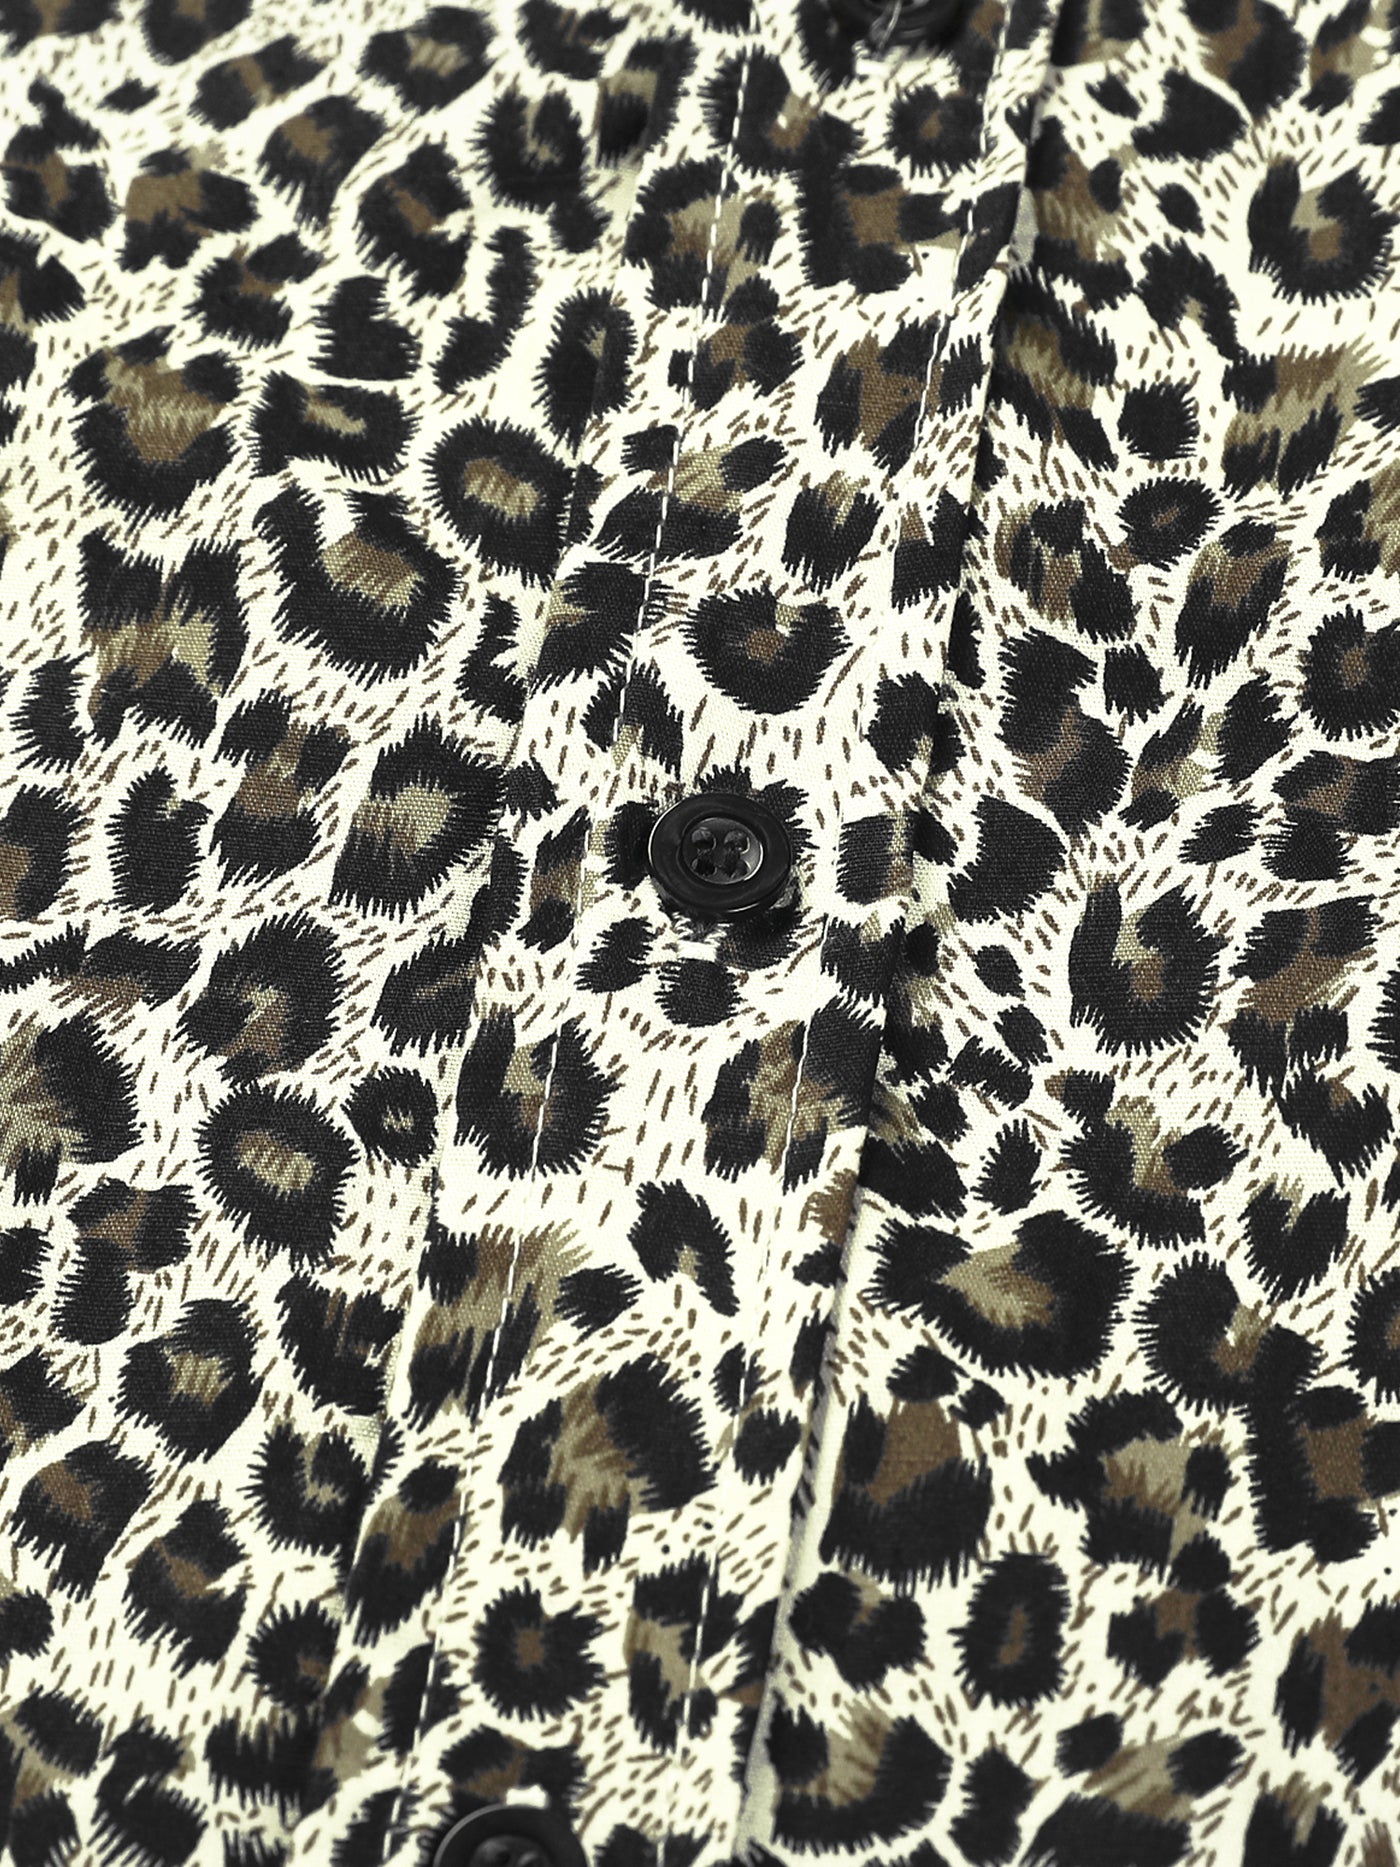 Bublédon Cotton Casual Leopard Print Button Long Sleeve Shirt